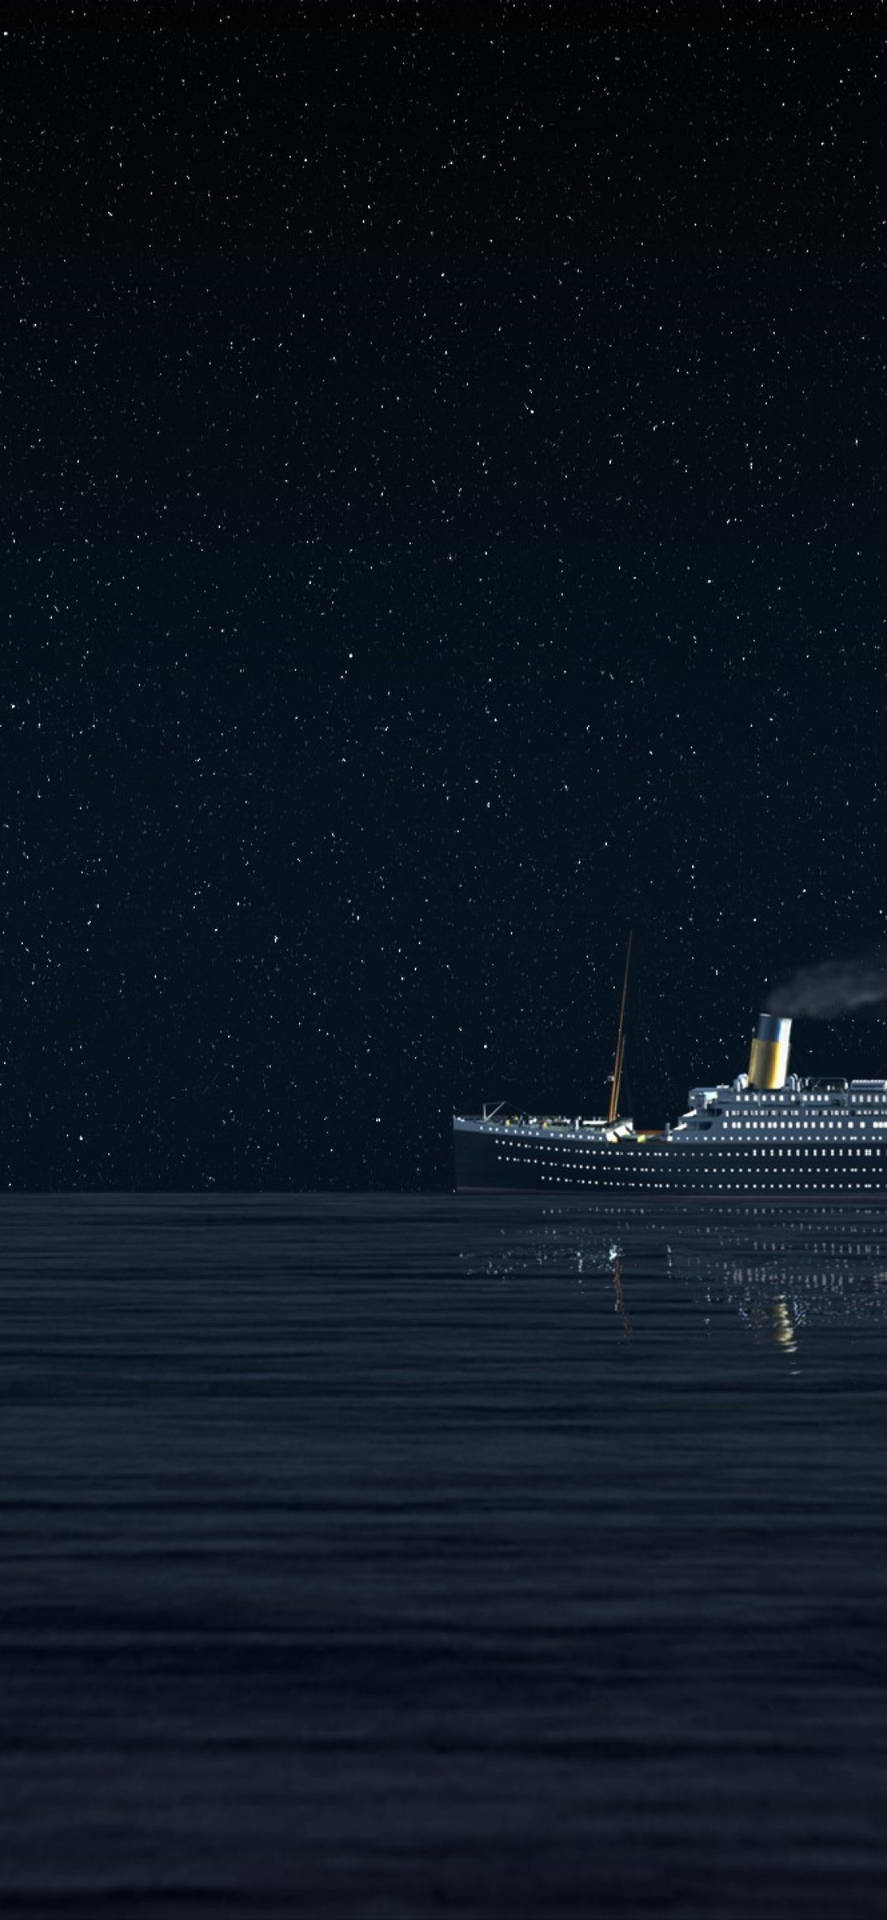 Titanic Starry Night Wallpaper